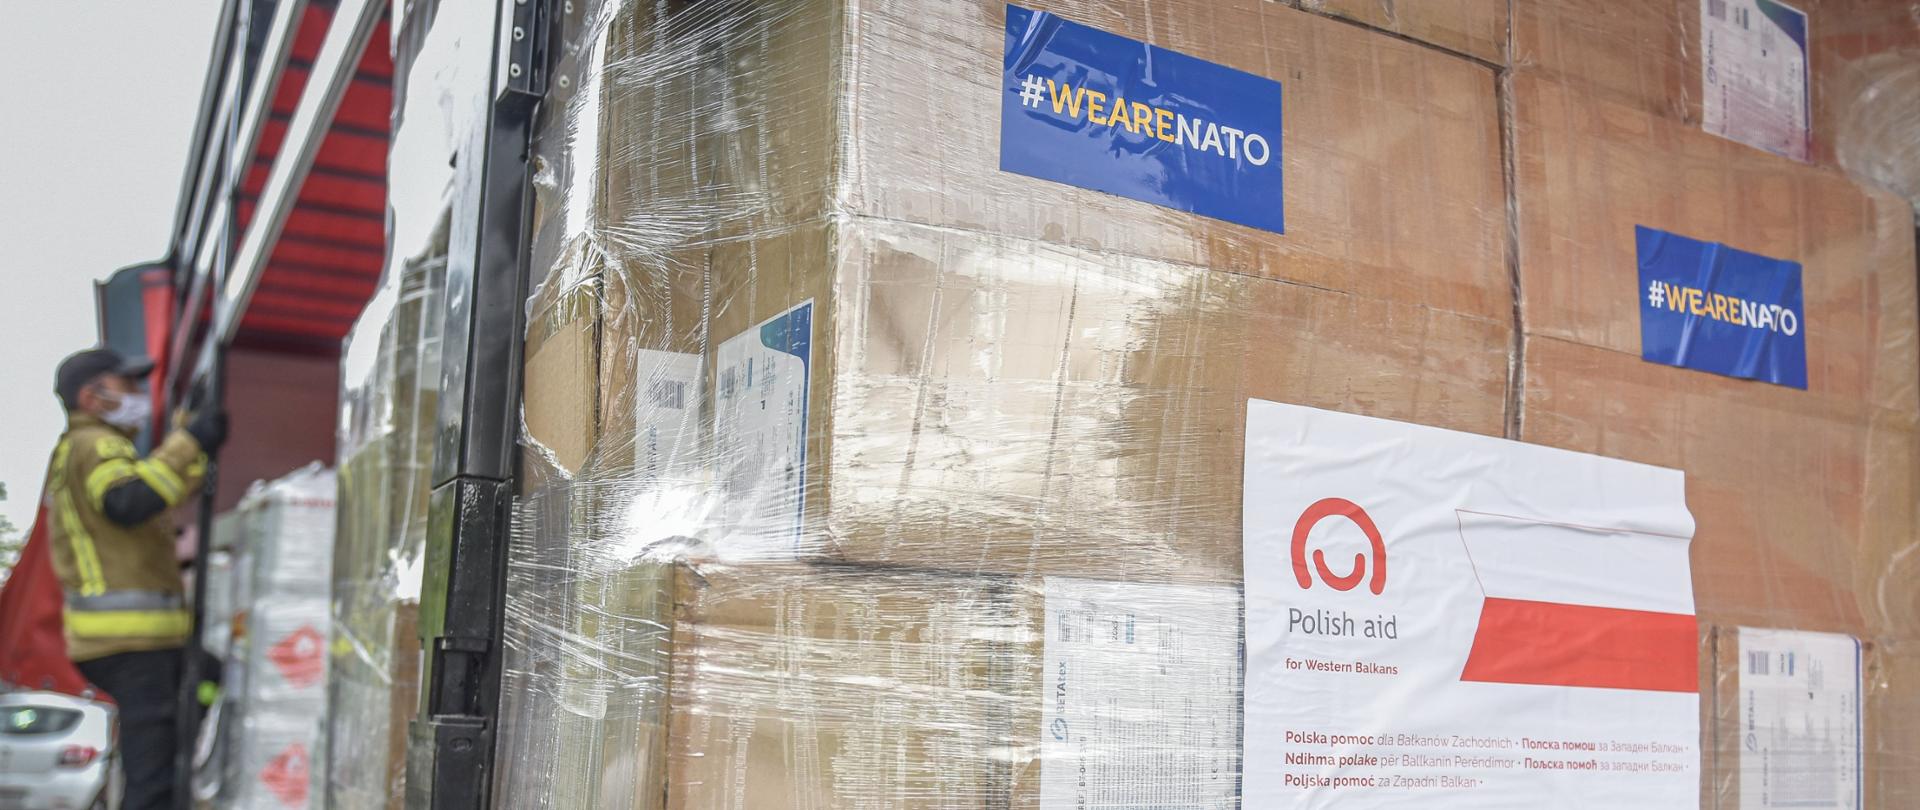 Polish Aid for Western Balkans